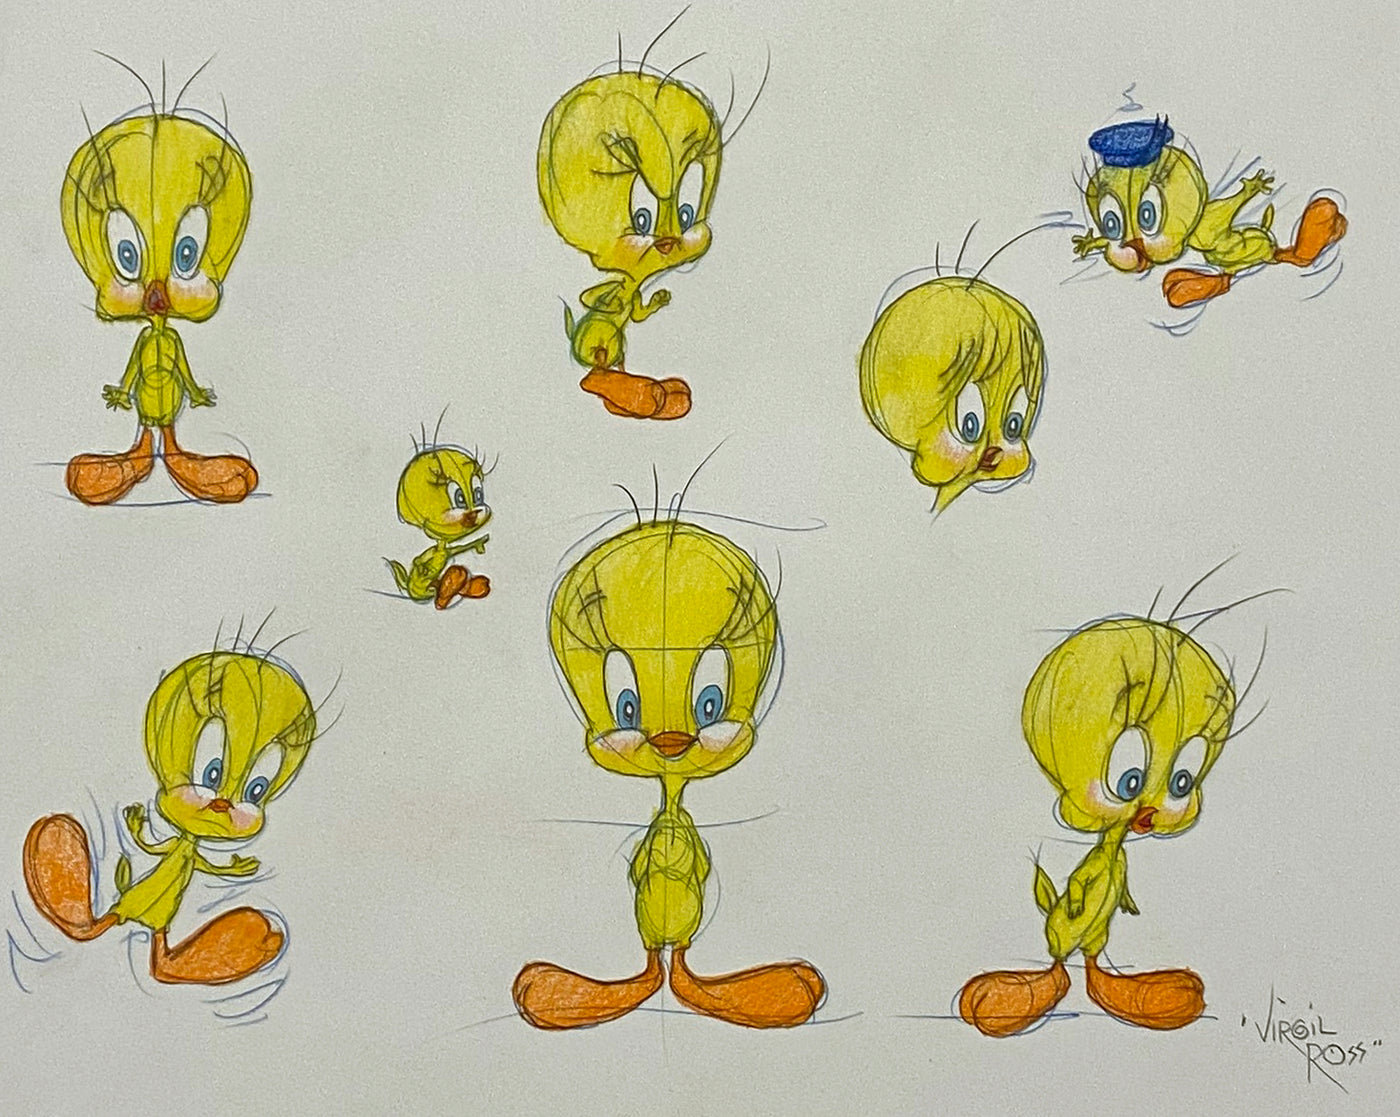 Original Warner Brothers Virgil Ross Model Sheet Animation Drawing featuring Tweety Bird